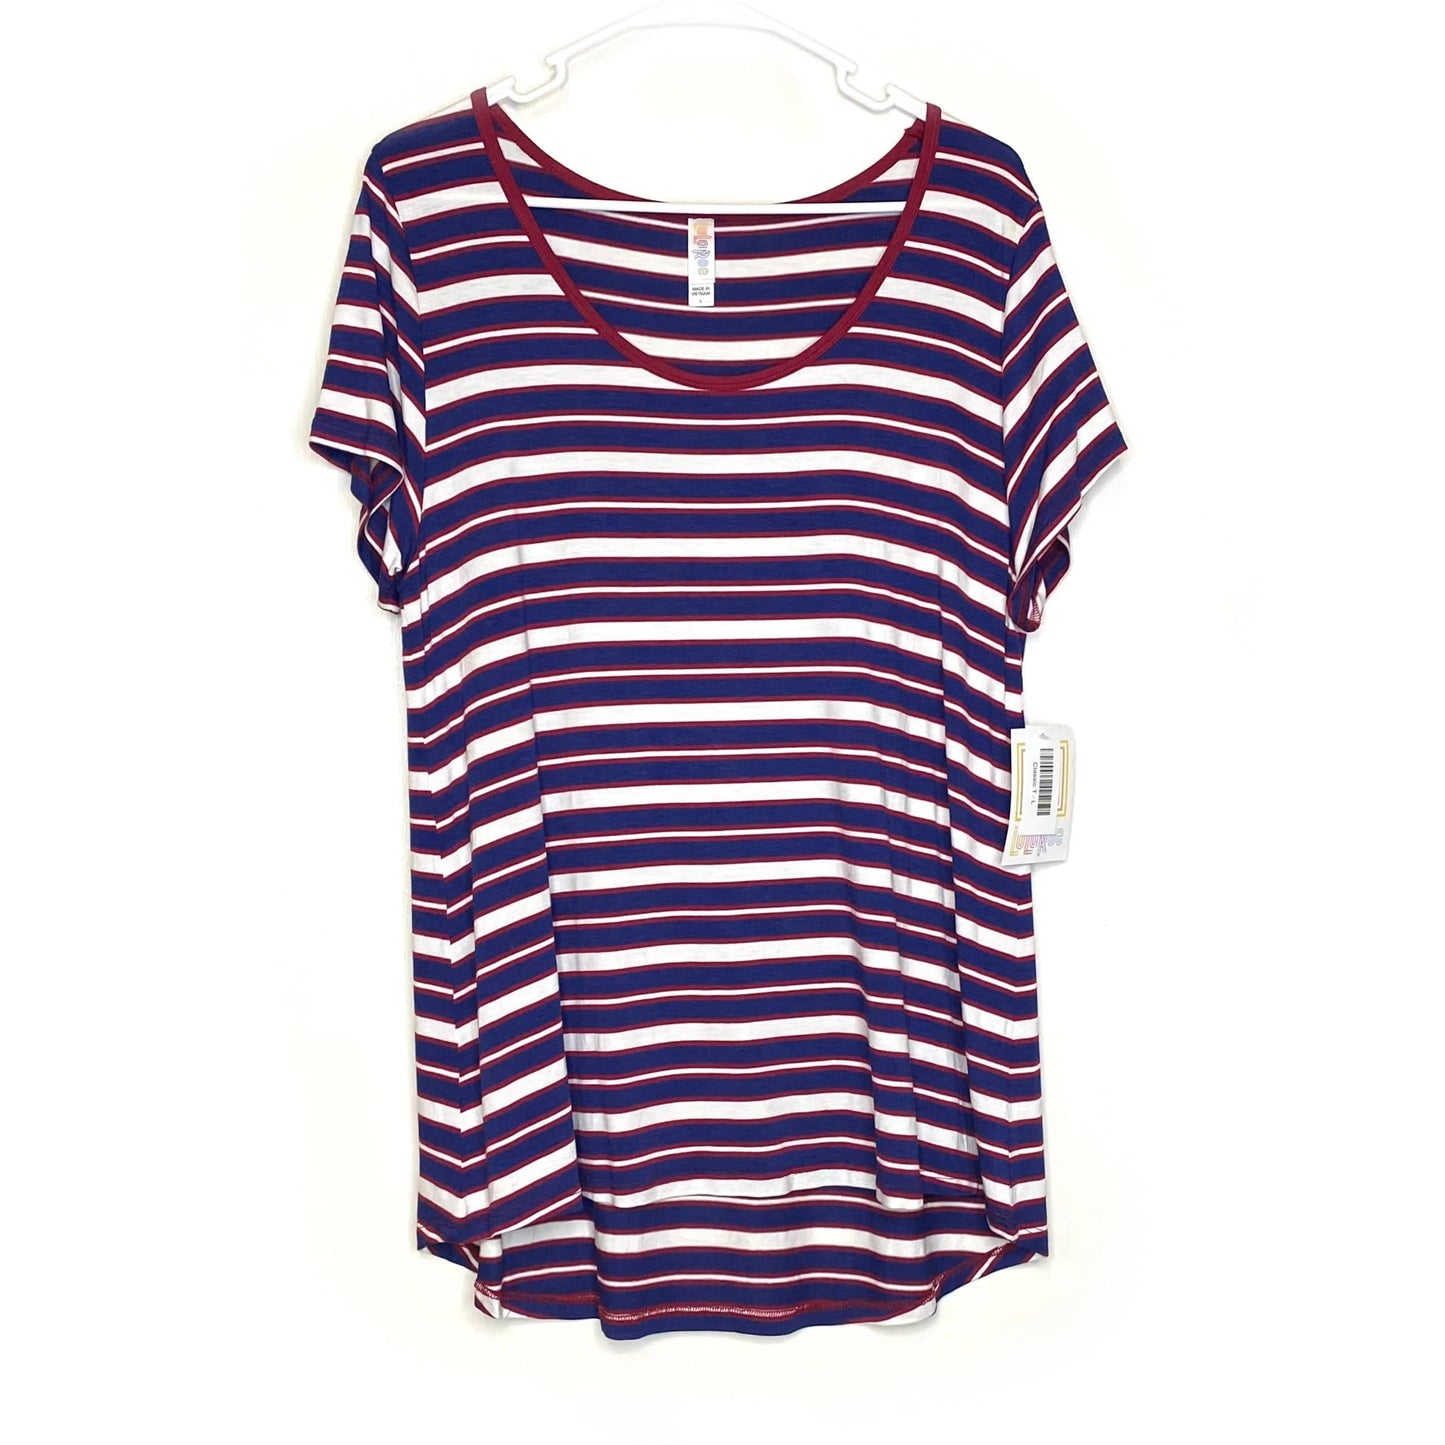 LuLaRoe Womens L Red/White/Blue Classic T Striped T-Shirt S/s NWT